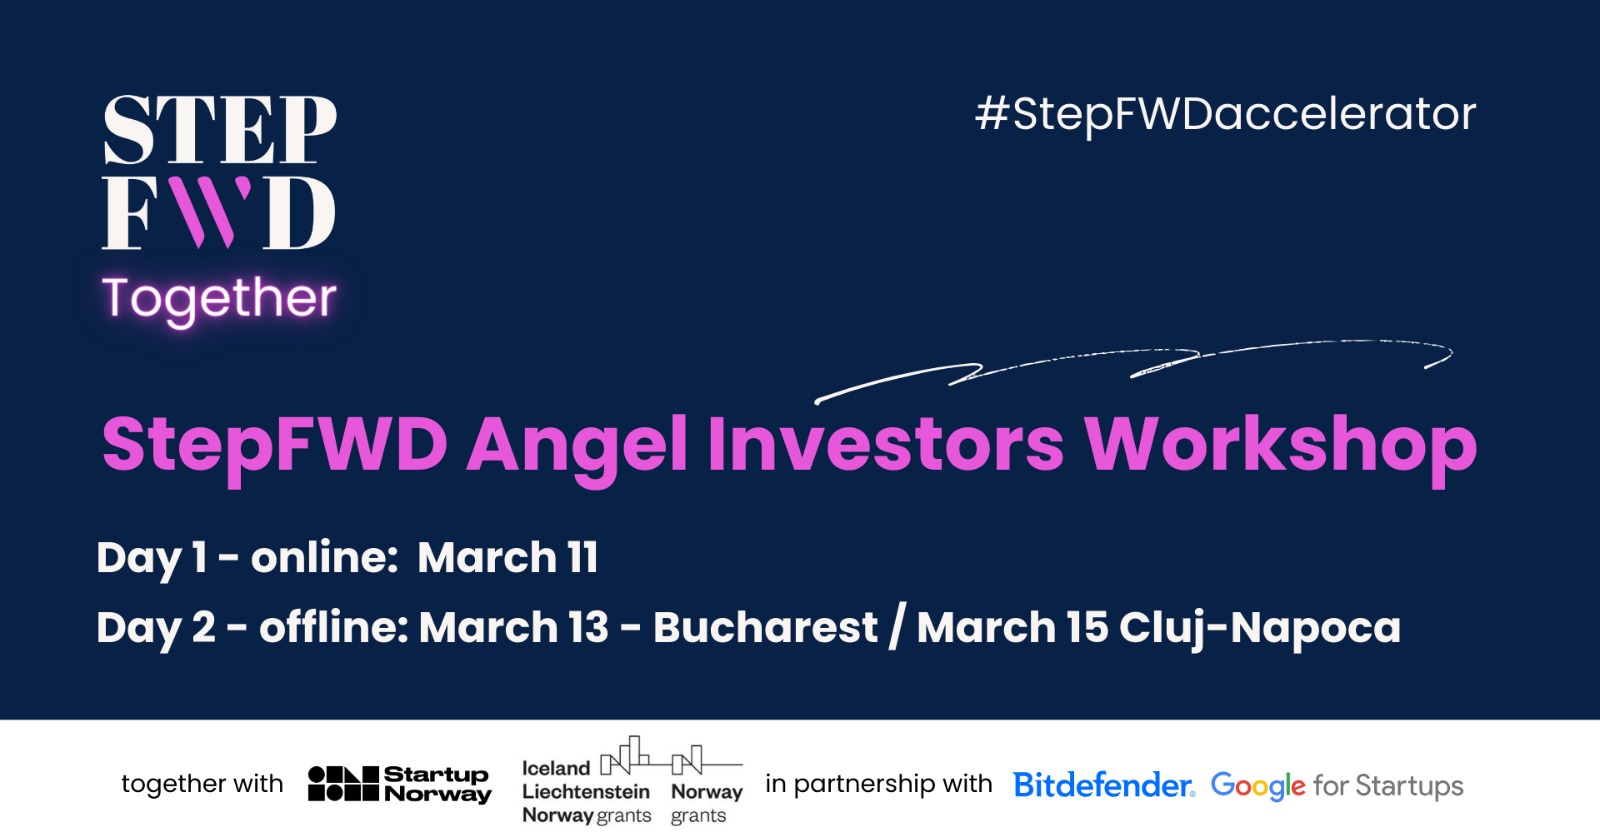 StepFWD Angel Investor